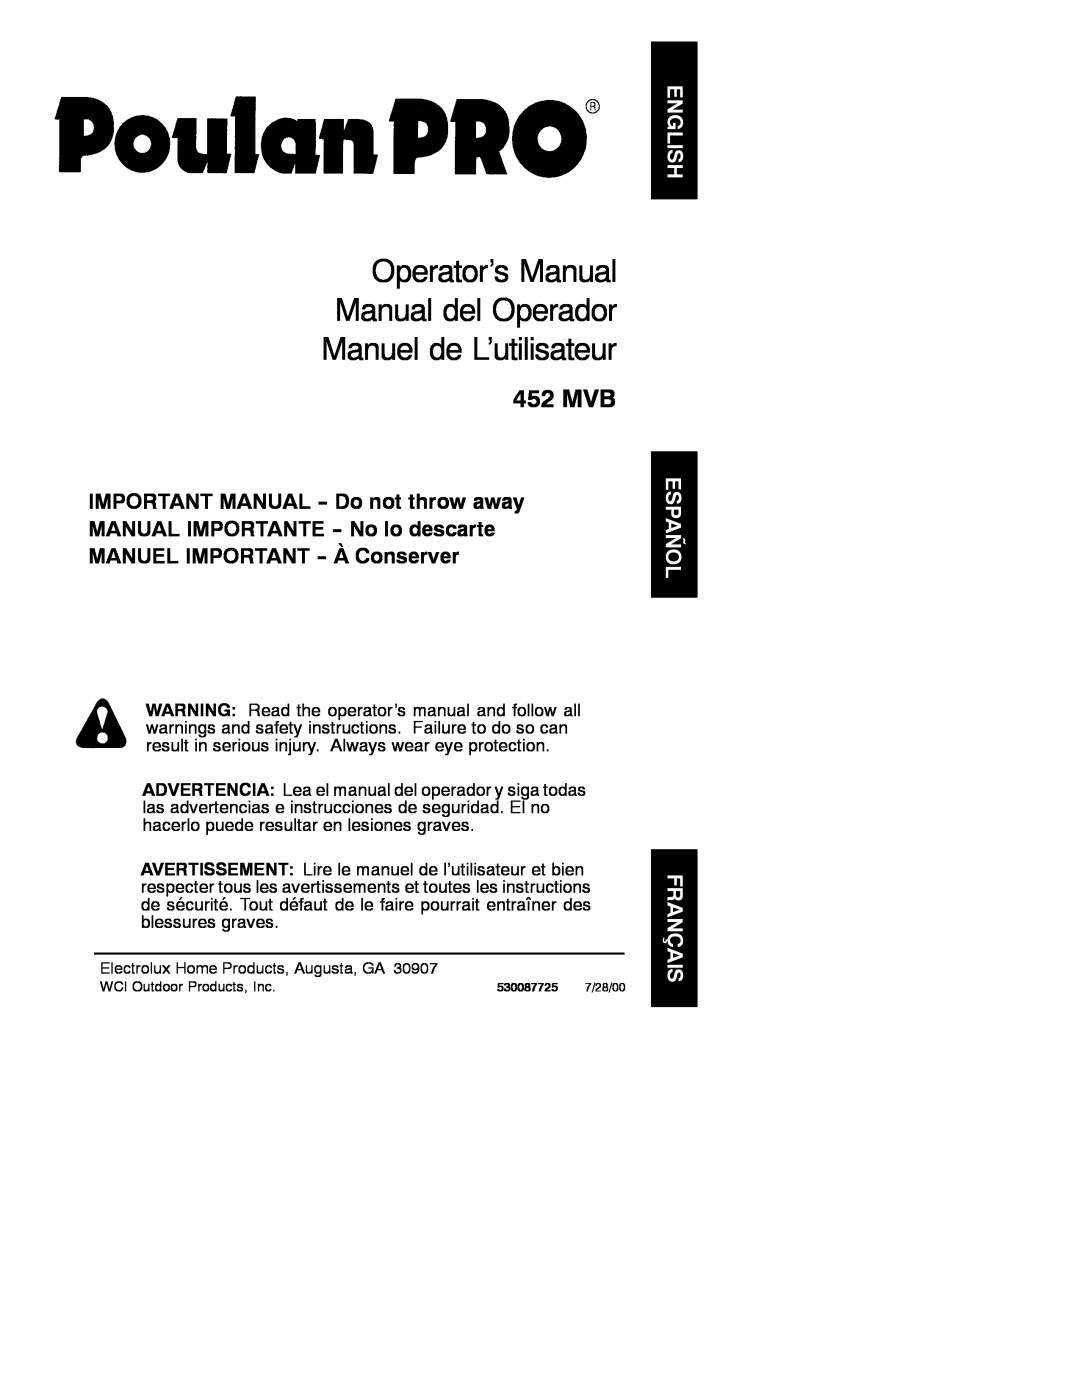 Poulan 452 MVB manual Operator’s Manual Manual del Operador, Manuel de L’utilisateur 